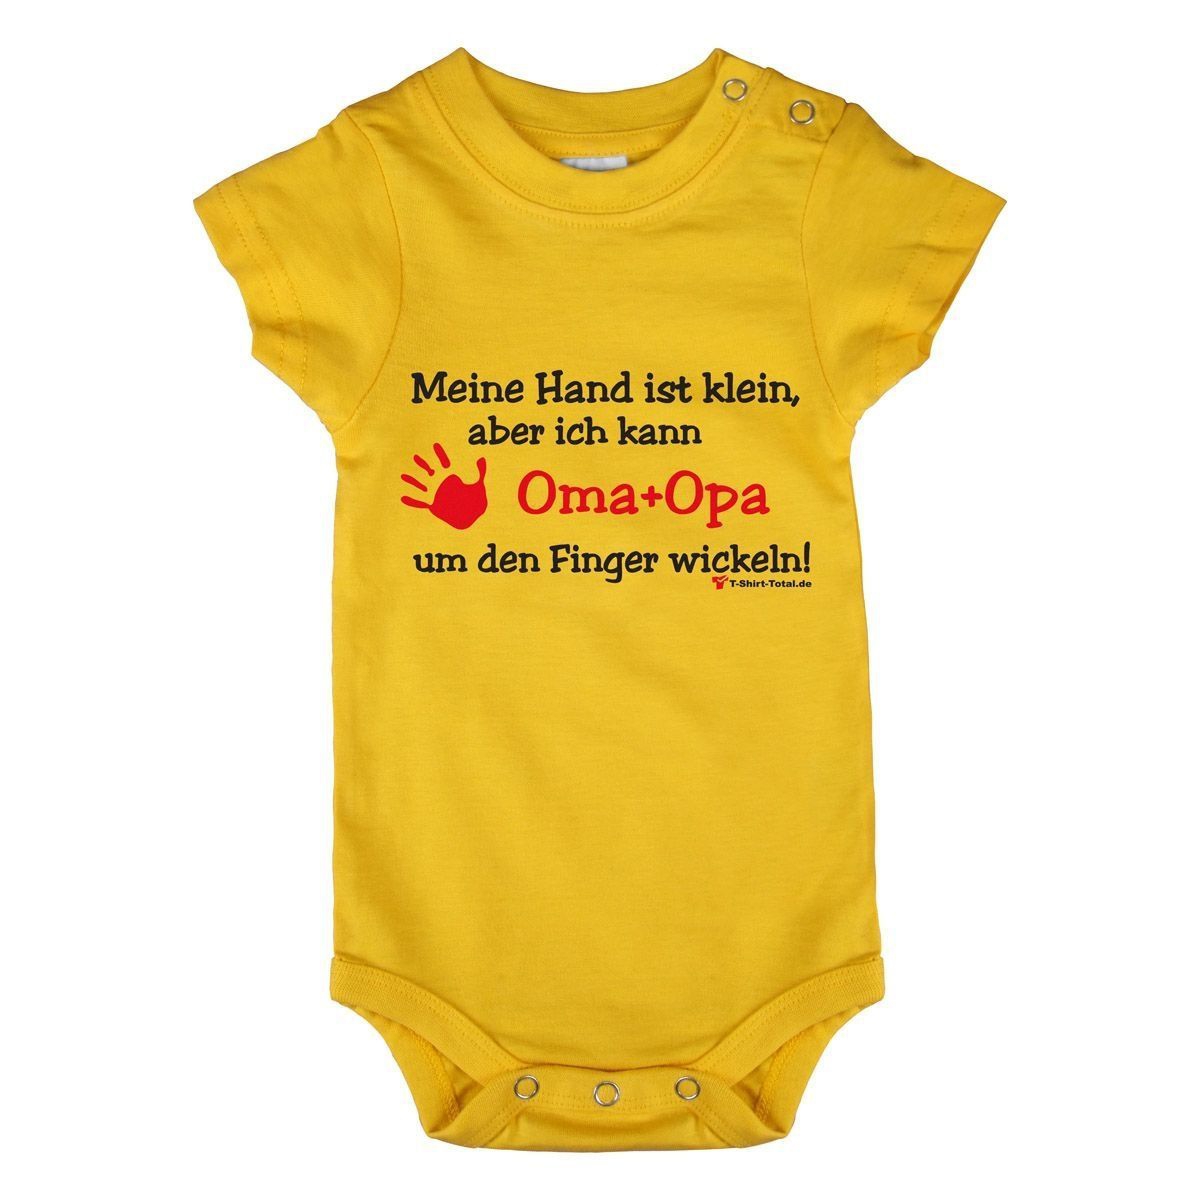 Kleine Hand Oma Opa Baby Body Kurzarm gelb 68 / 74